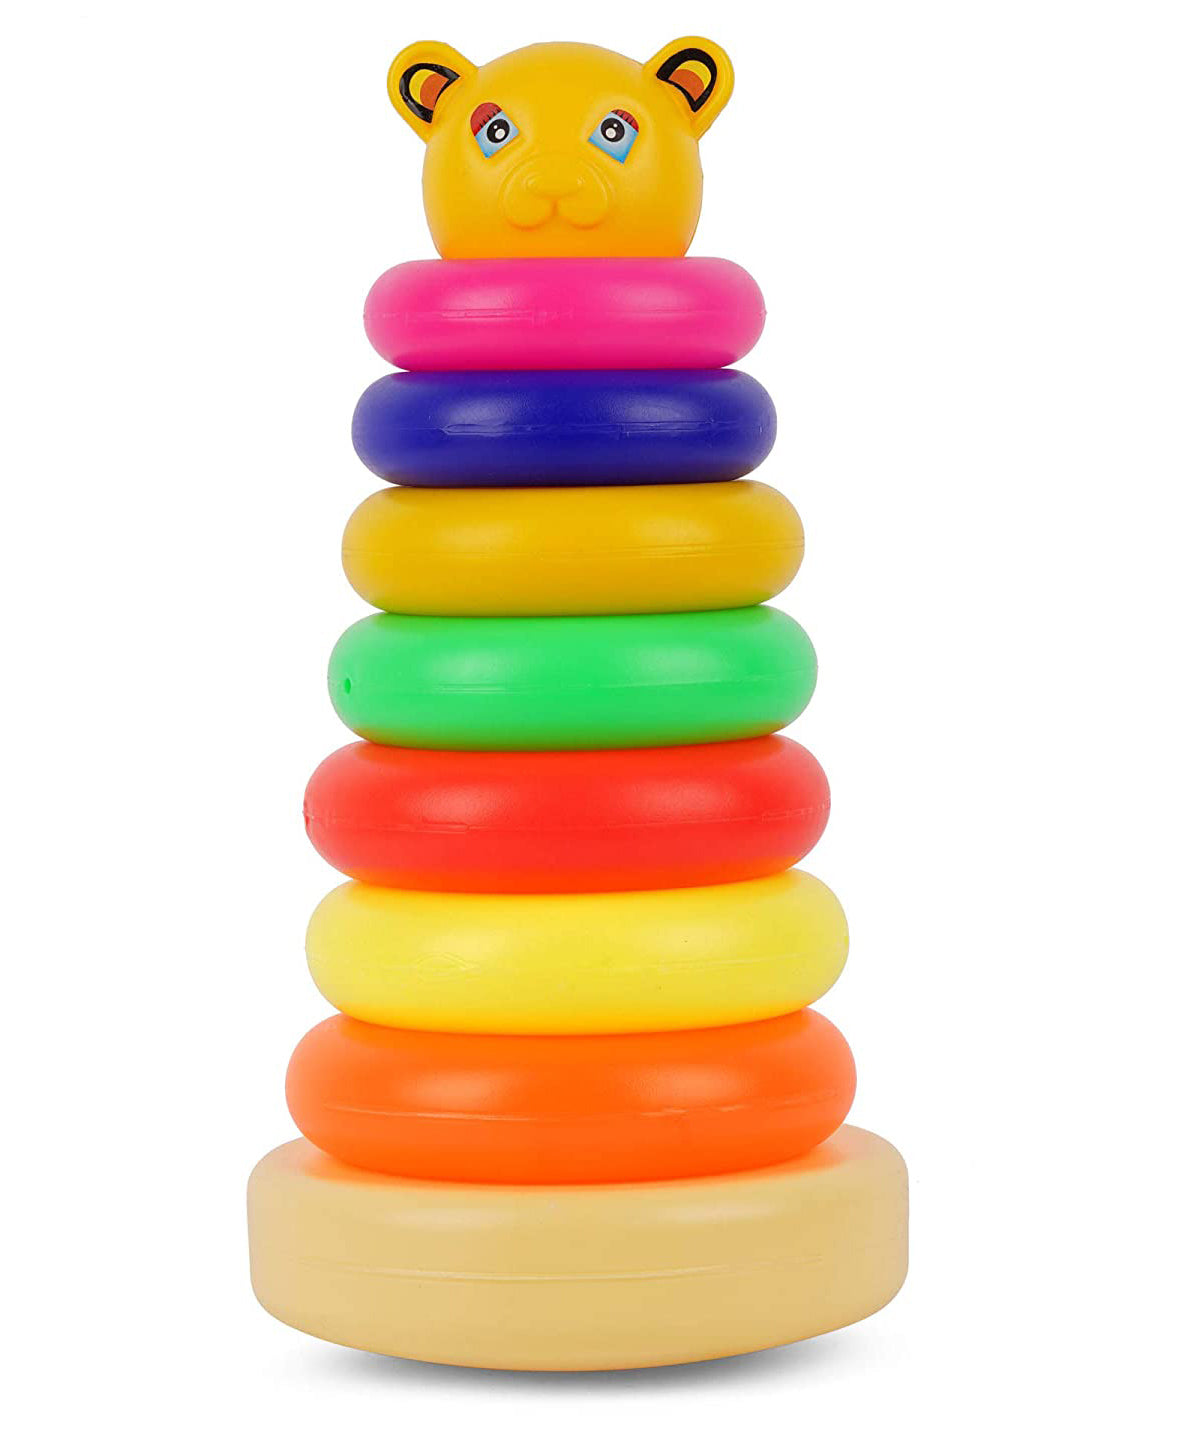 Vinmot Educational Teddy Stacking Rings - 7-Piece Tower Set